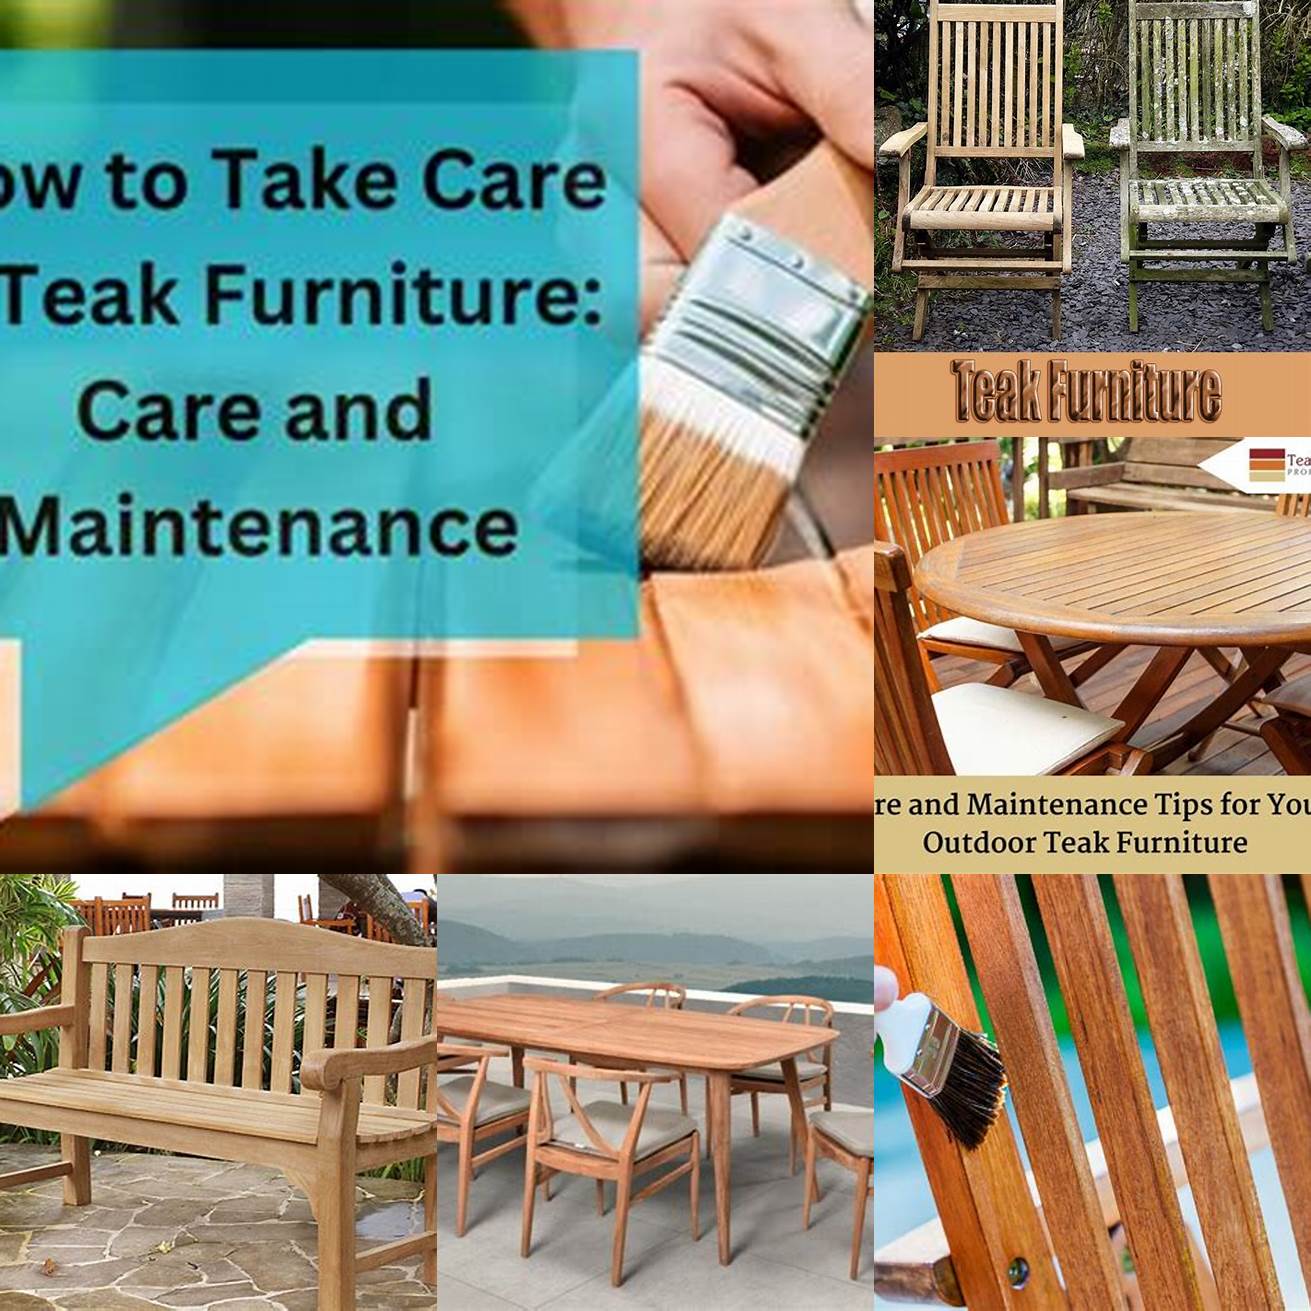 Teak furniture care and maintenance